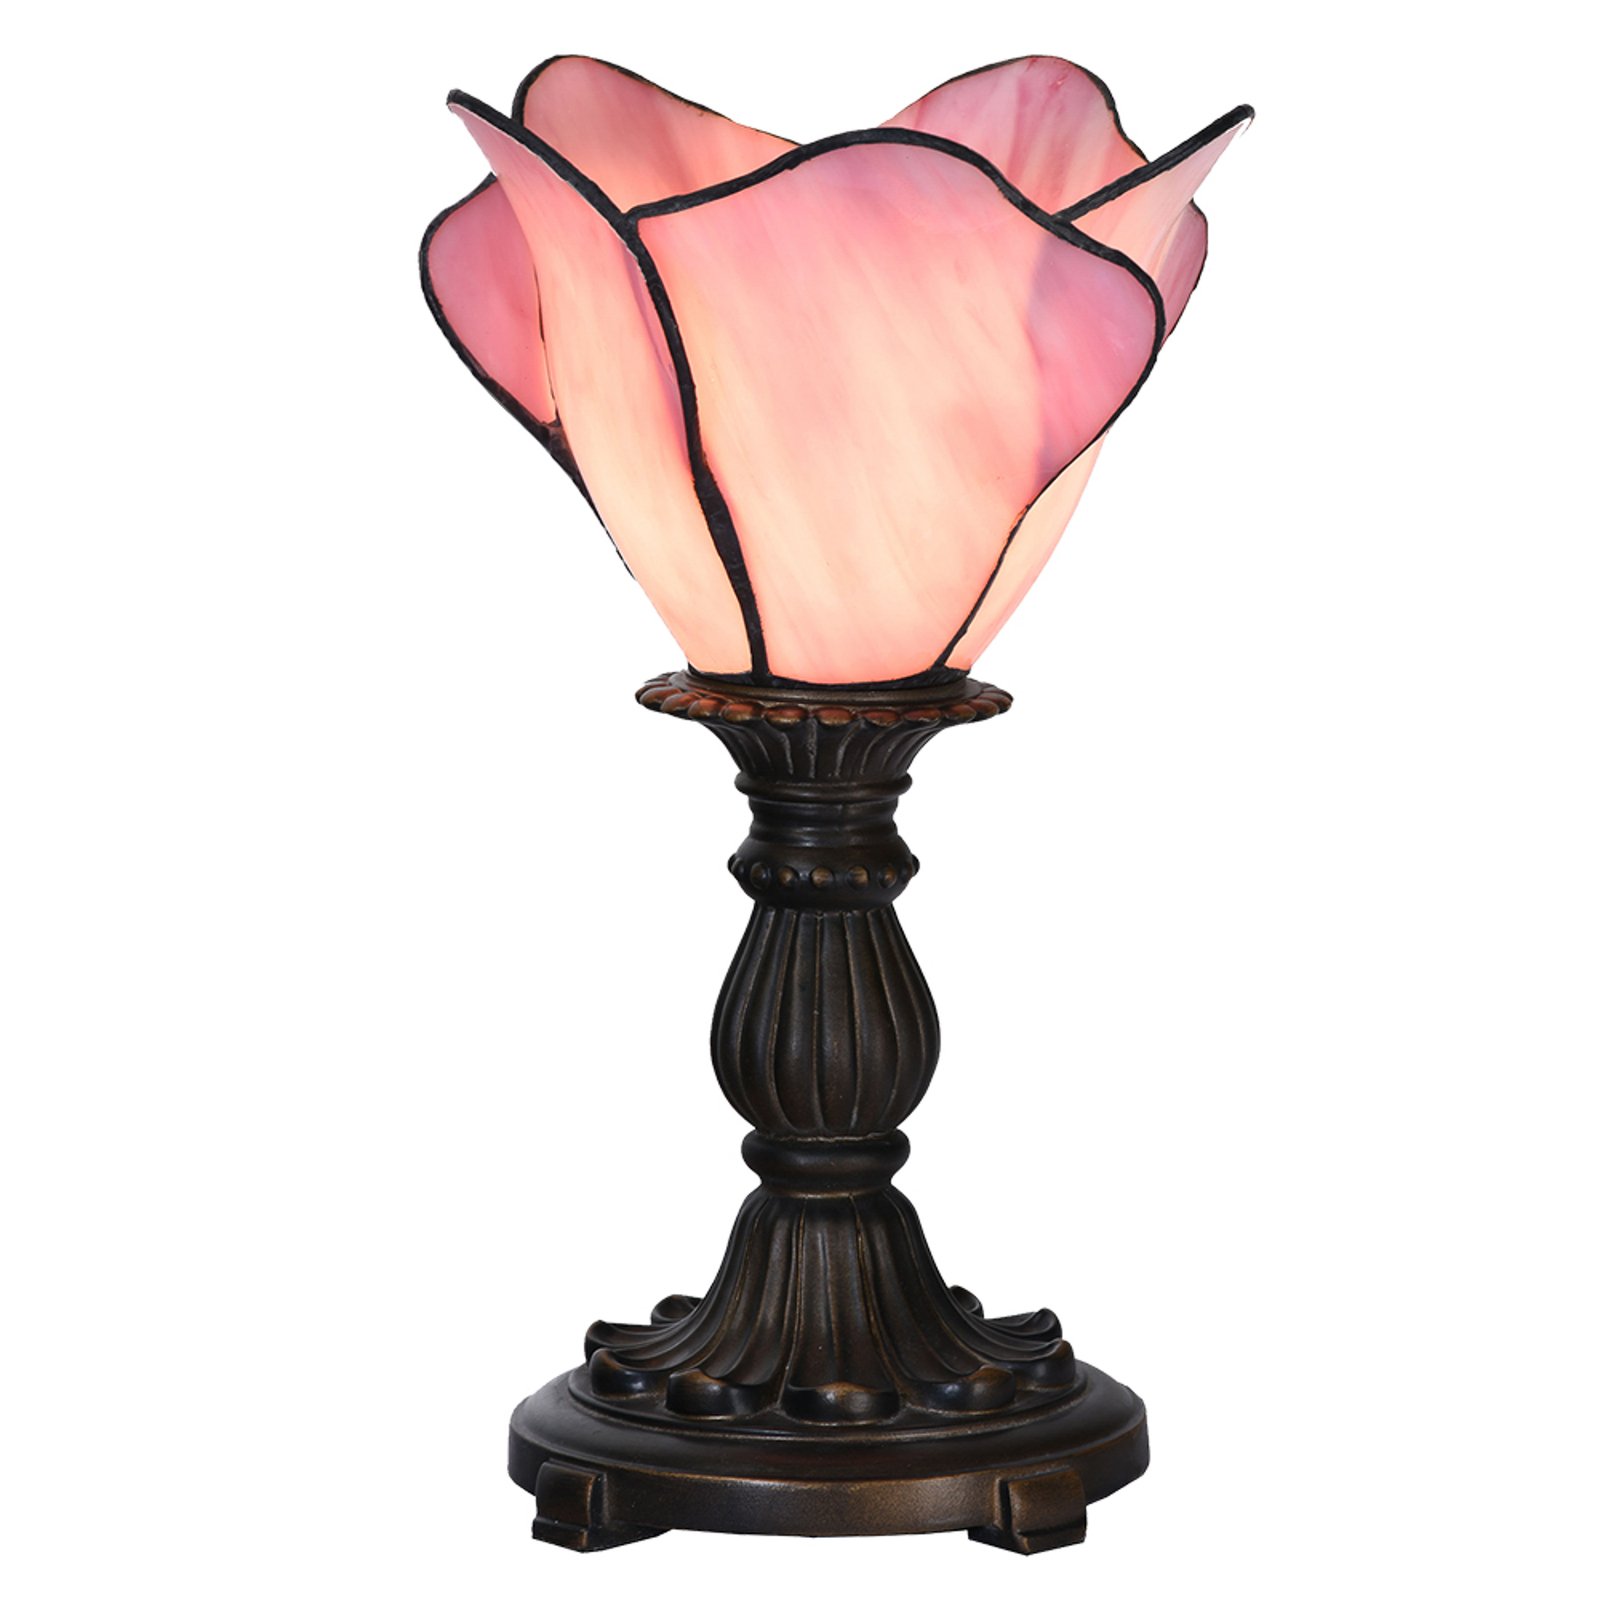 Tischlampe 5LL-6099 in Rosa, Tiffany-Stil